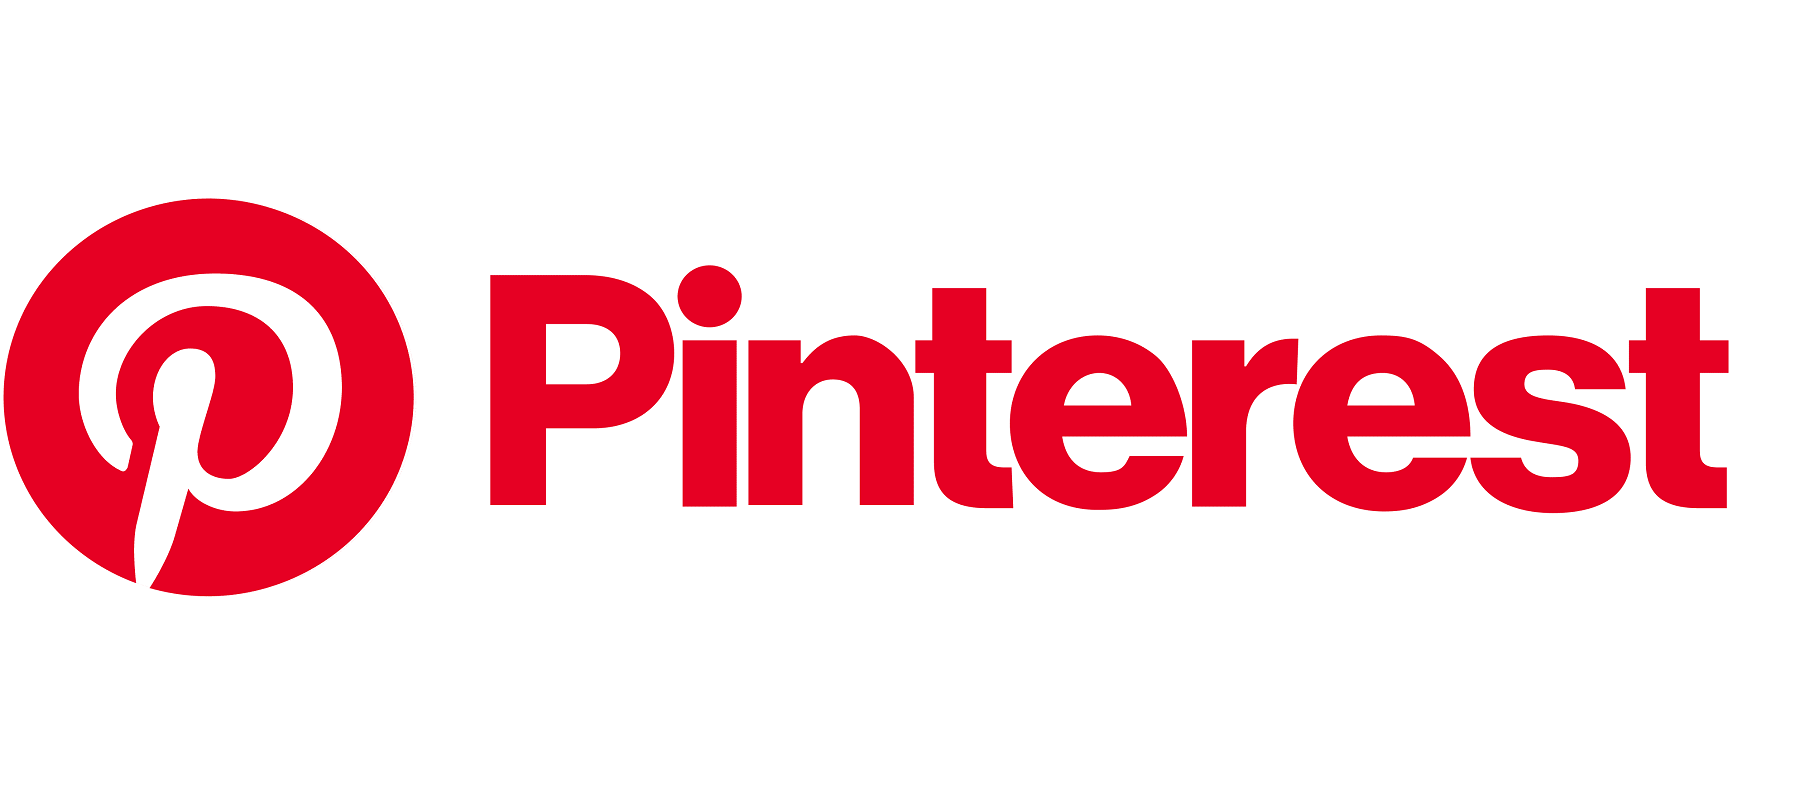 Pinterest and InMarket partner for enhanced real-world advertising measurement